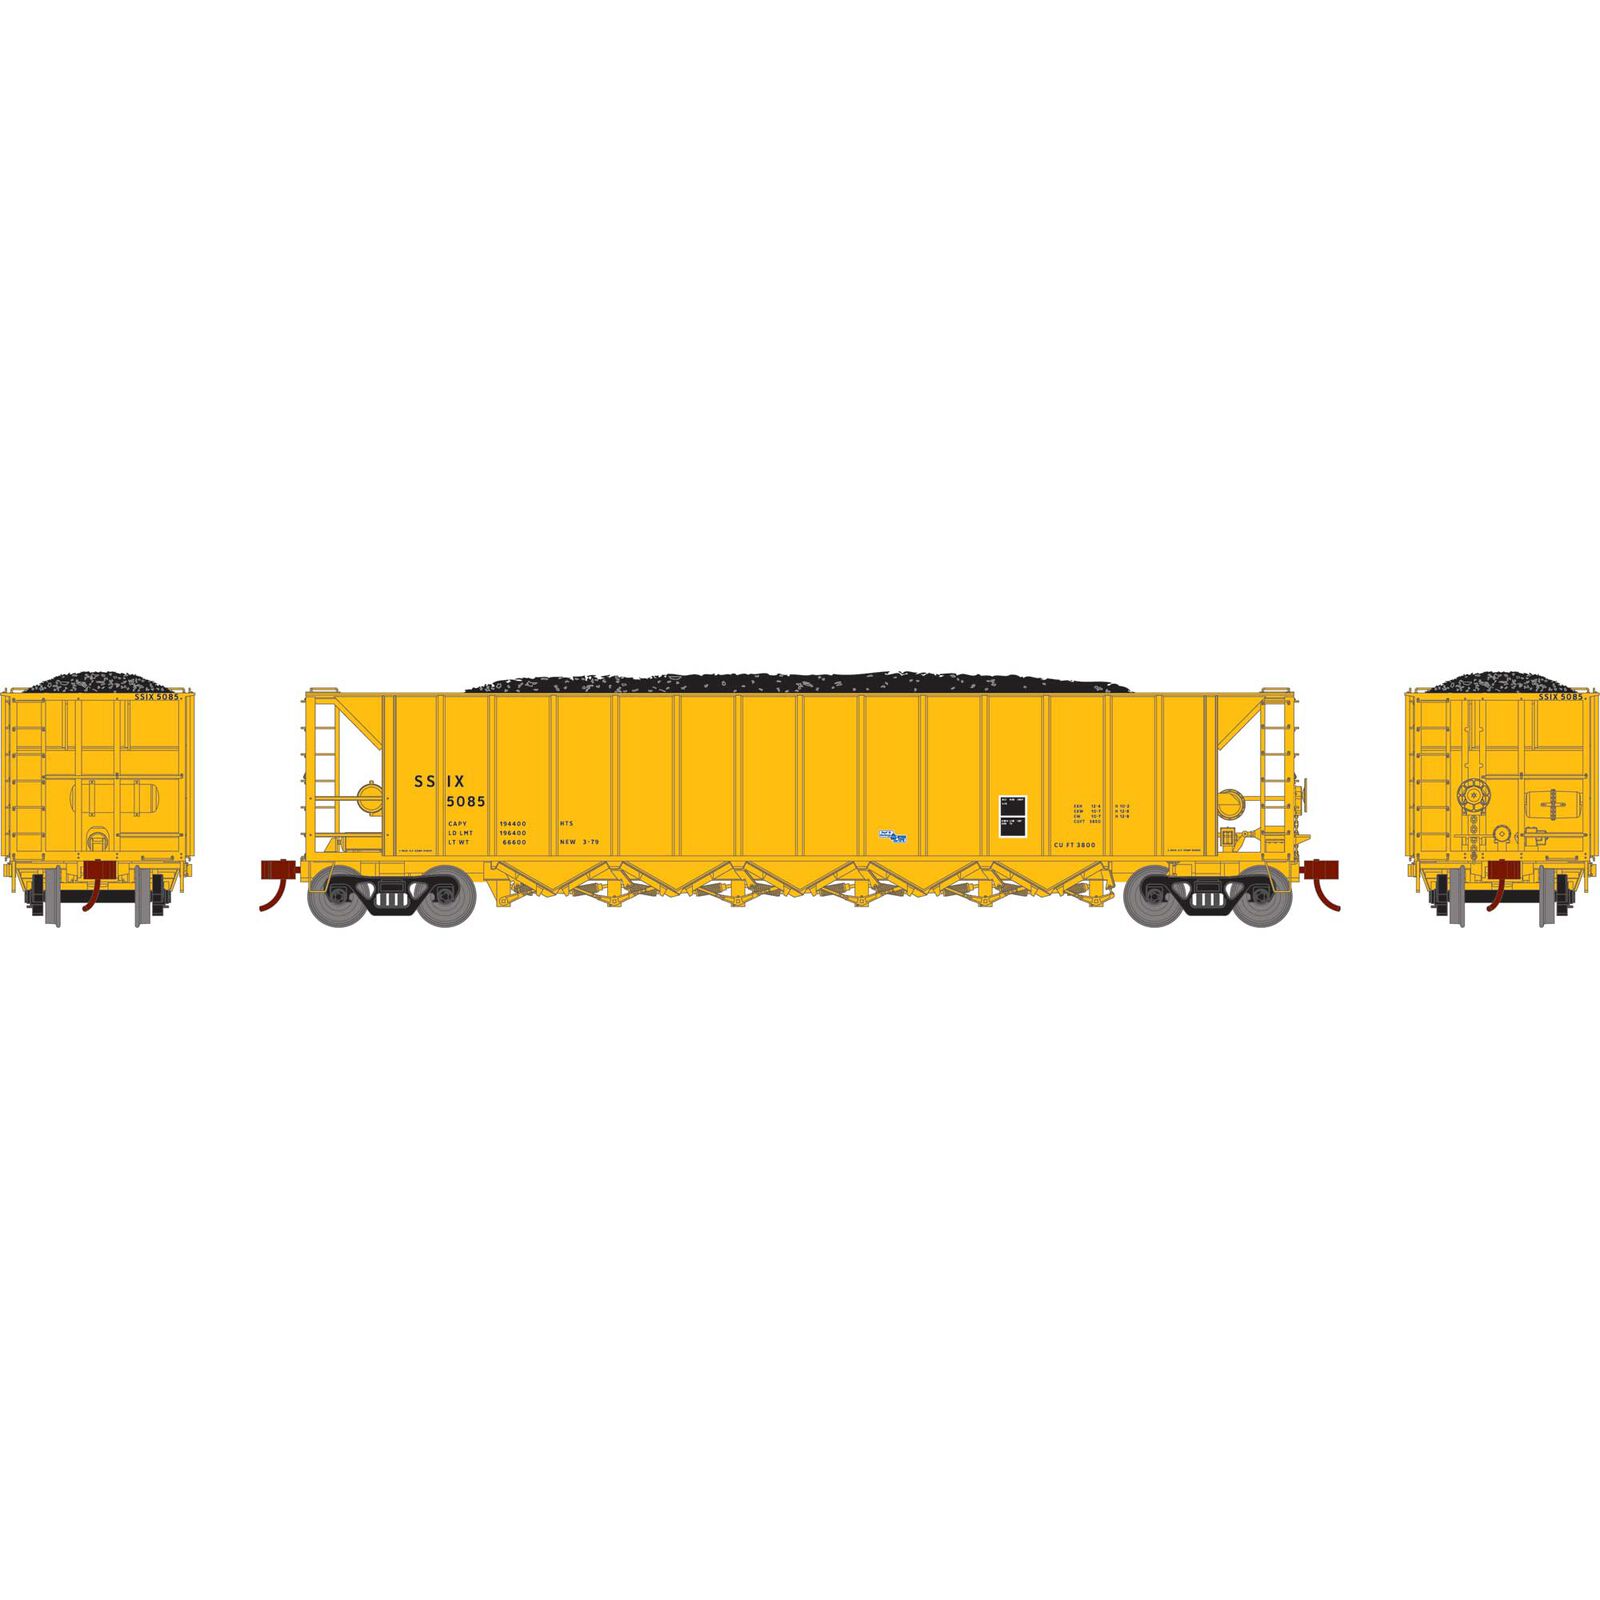 / 5101 5099 / 5094 / 5-Bay SSIX HO Hopper, Ortner #5091 Rapid 5098 (5) / Discharge | Athearn Train Model